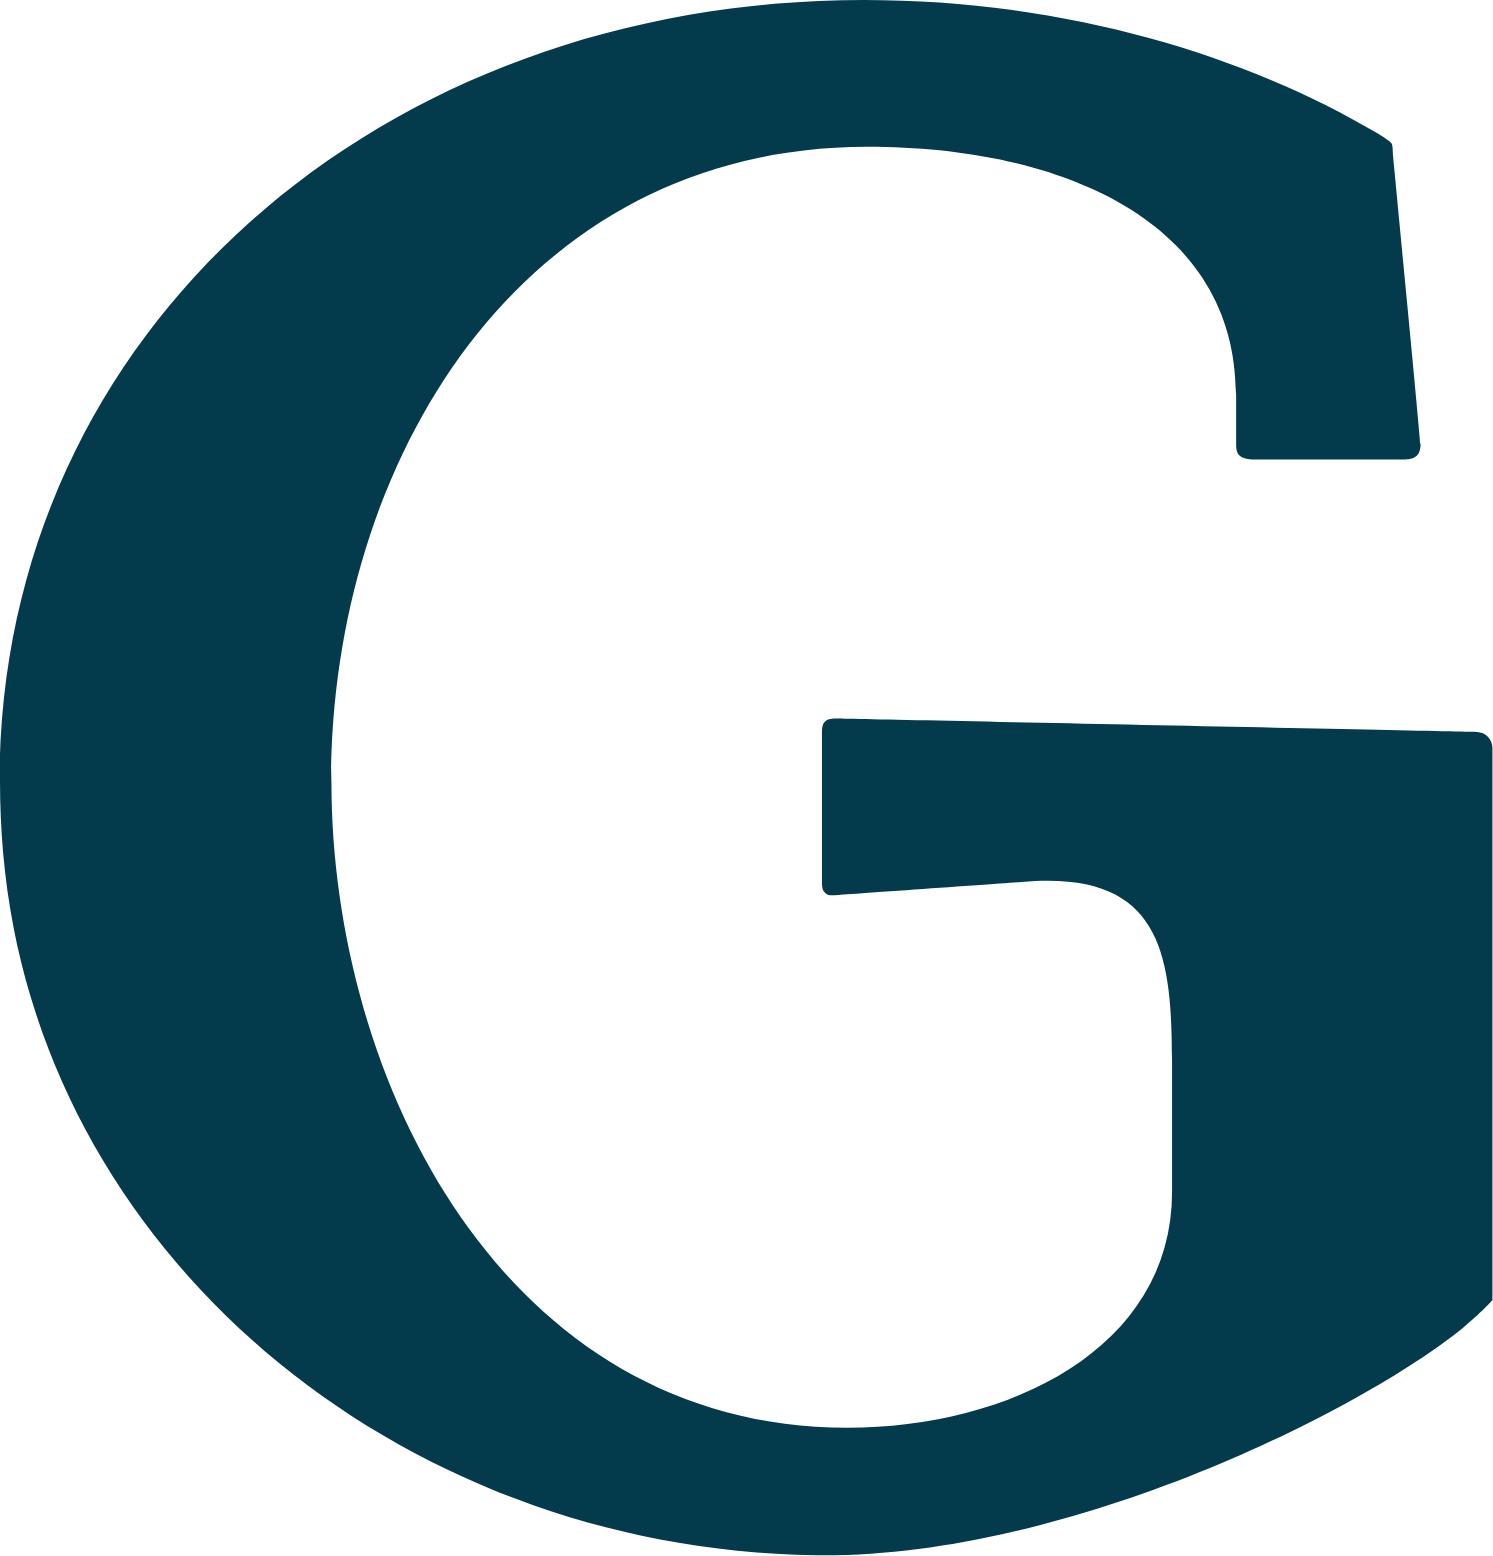 Grove Collaborative logo (PNG transparent)